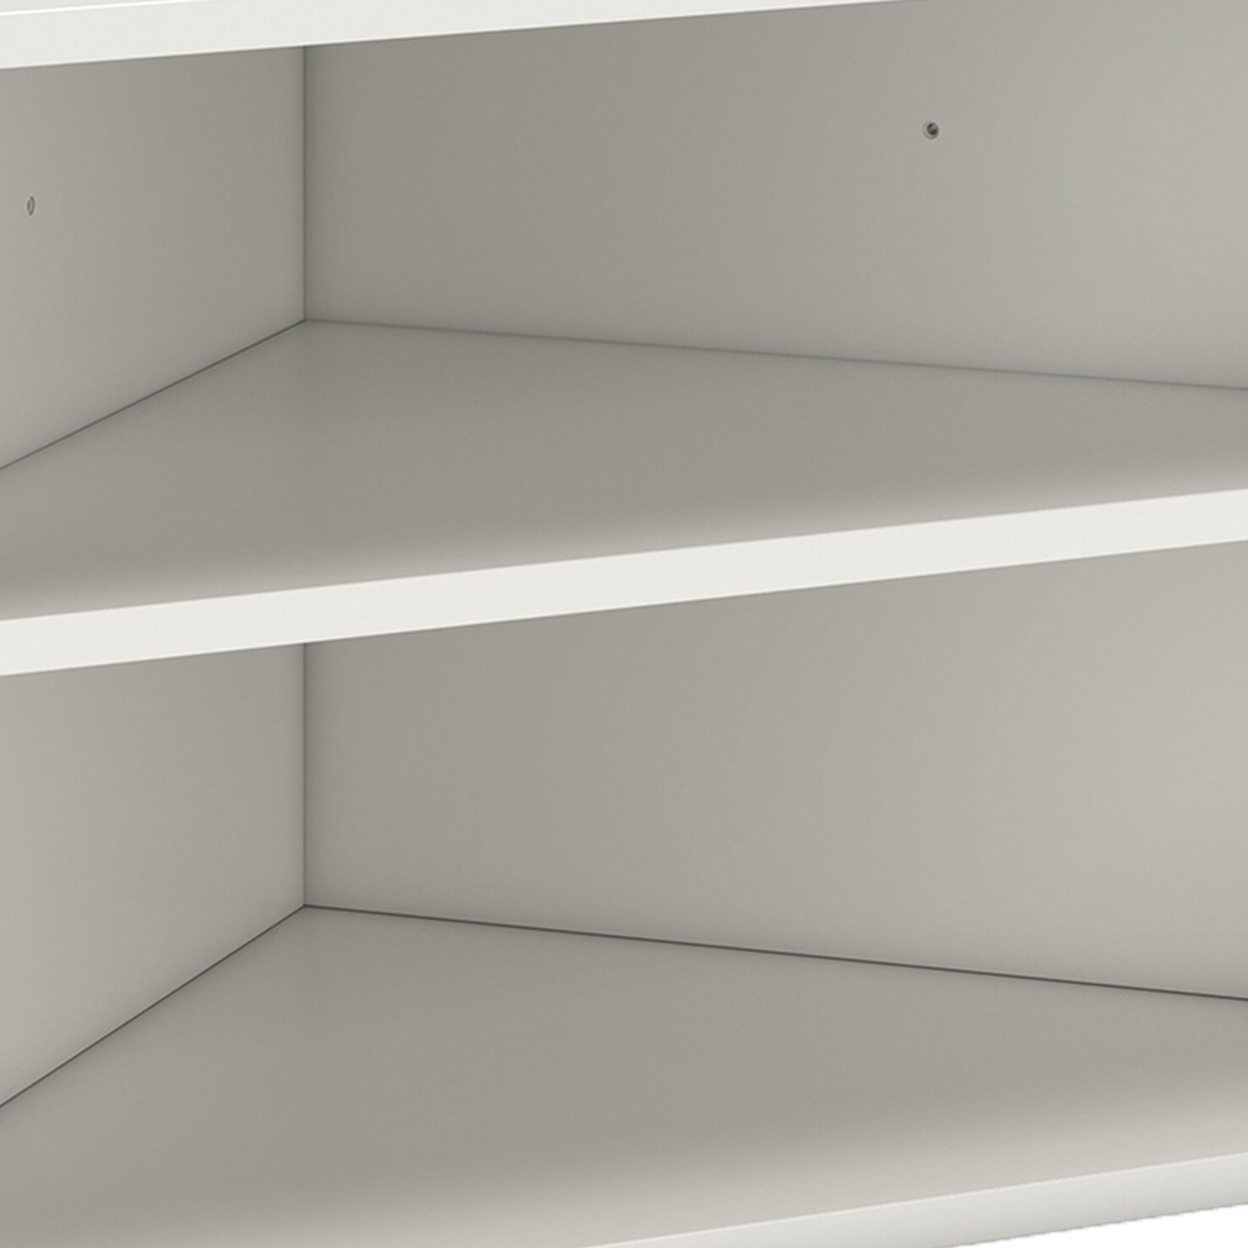 Tio 29 Inch Corner Bookcase Console With 2 Shelves, Triangle Shaped, White- Saltoro Sherpi